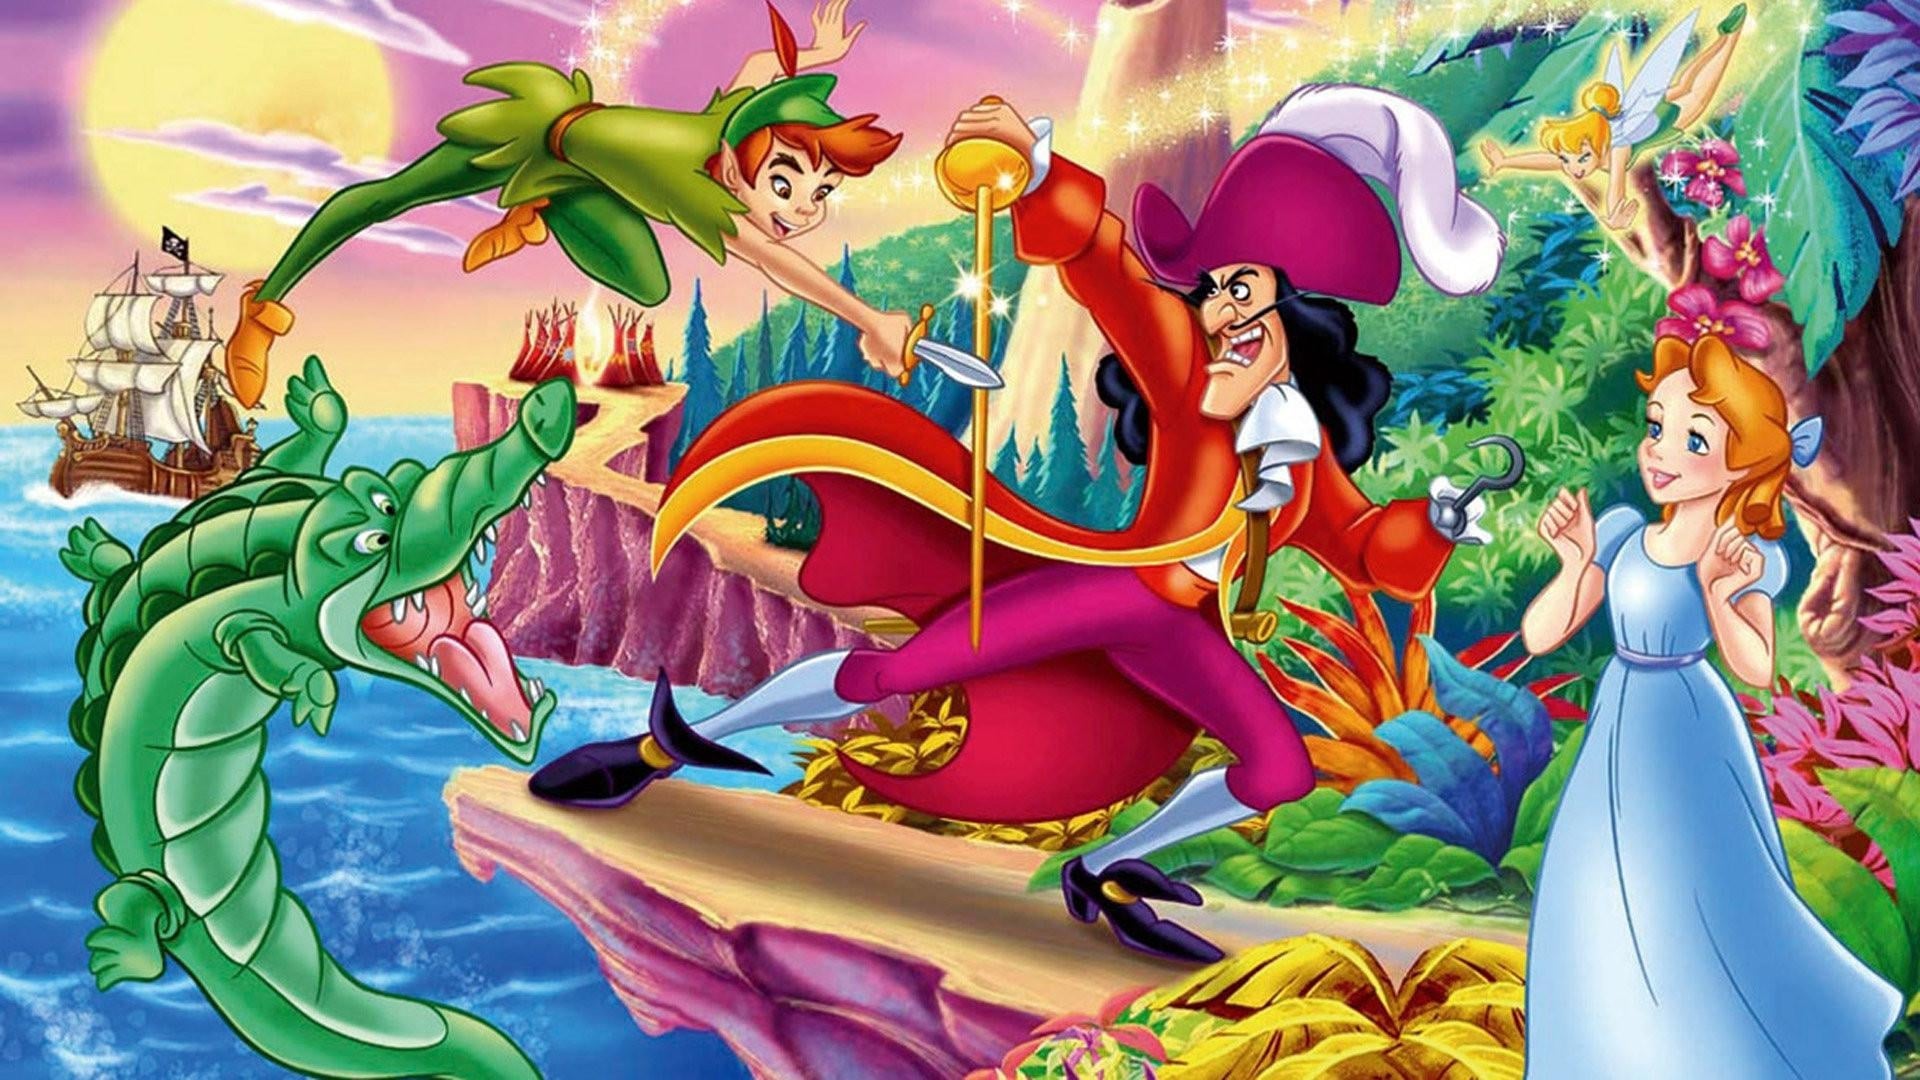 Disney's Peter Pan: The Legend of Neverland